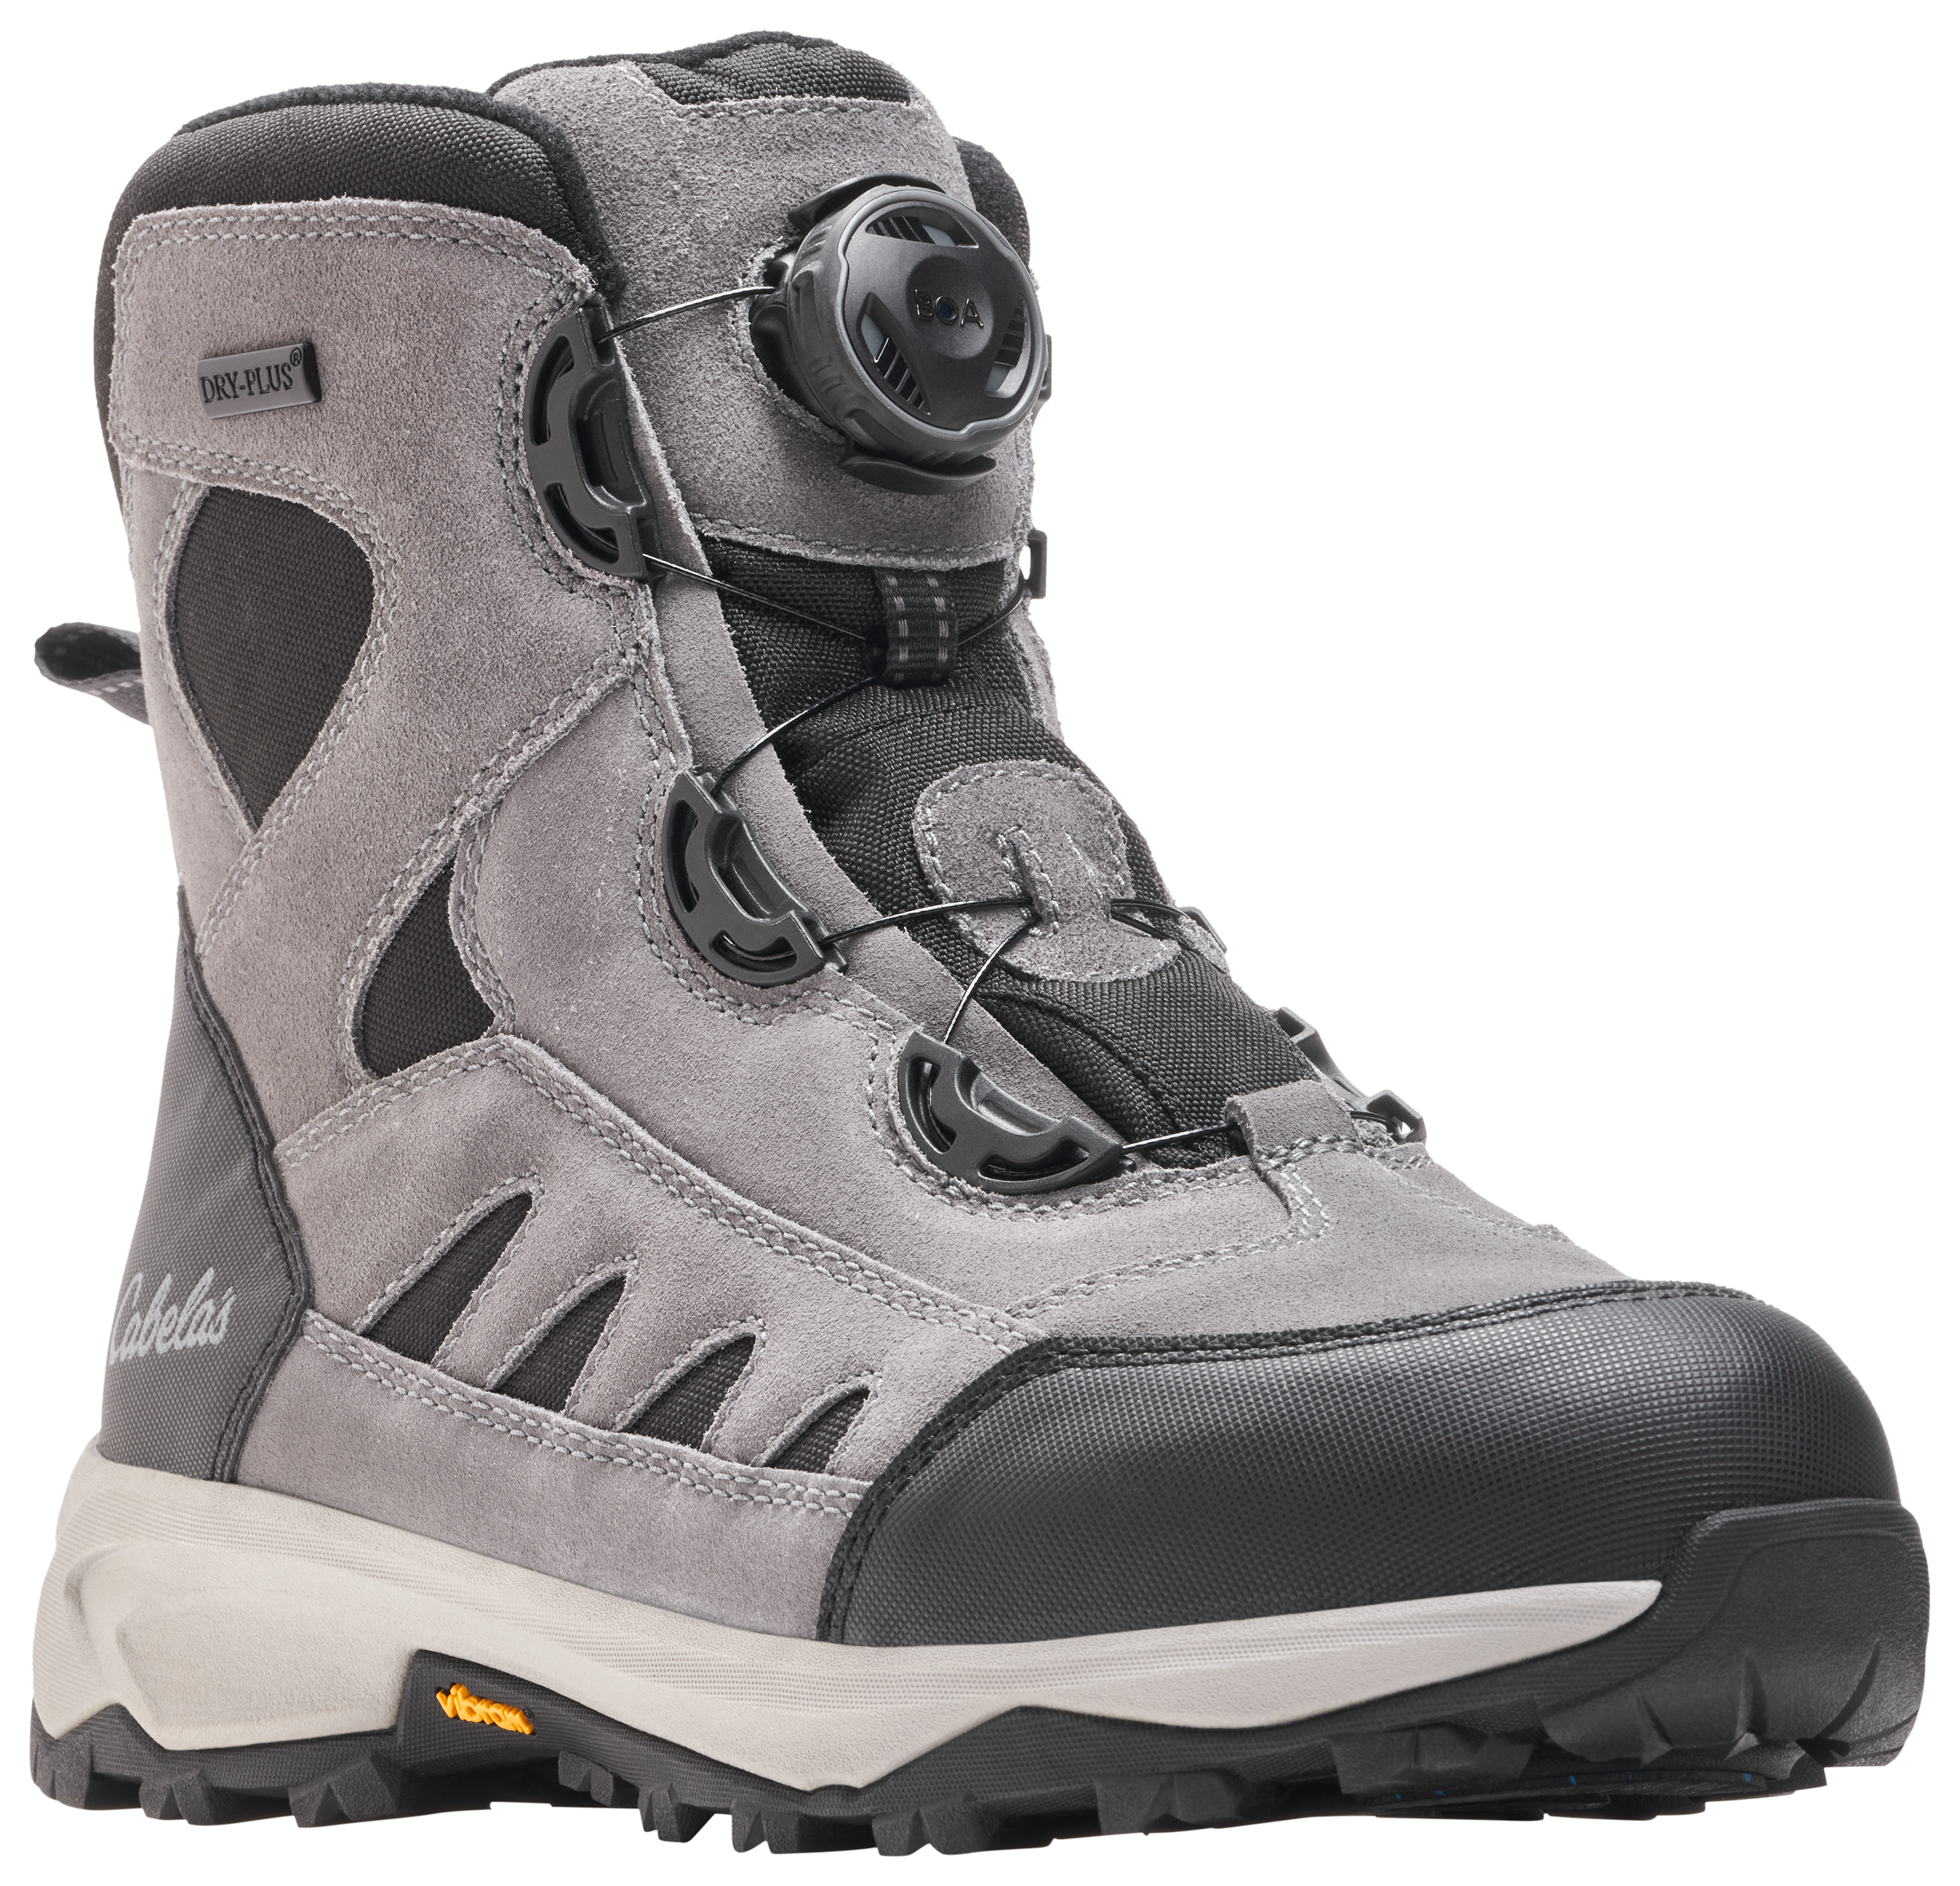 Cabela's Snow Runner Max 2.0 BOA Insulated Waterproof Winter Boots for Men - Granite Gray - 10.5M